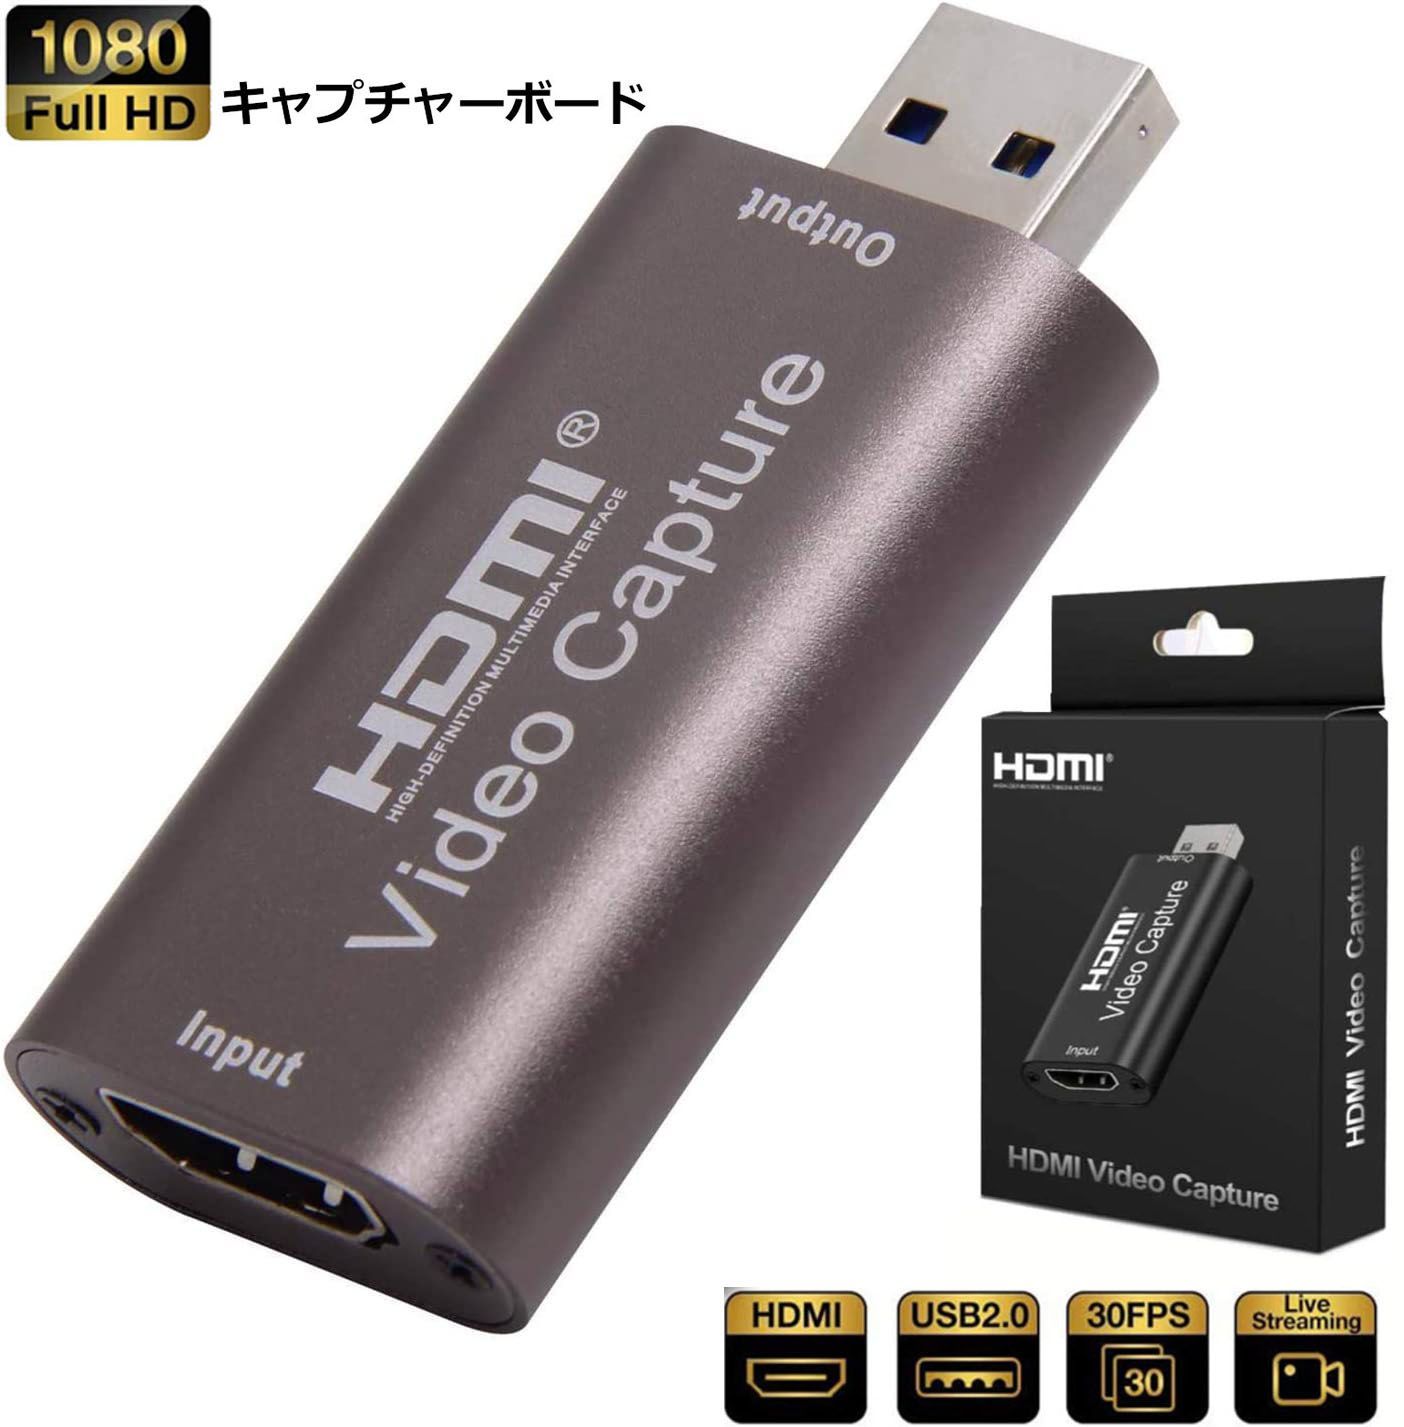 HDMI ビデオキャプチャカード キャプチャーボード HDMI USB2.0 1080P 30Hz ゲームキャプチャー 録画 ライブ会議に適用 ゲーム 実況生配信 画面共有 小型軽量 DSLR ビデオカメラ ミラーレス PS4 Nintendo Swi - メルカリ